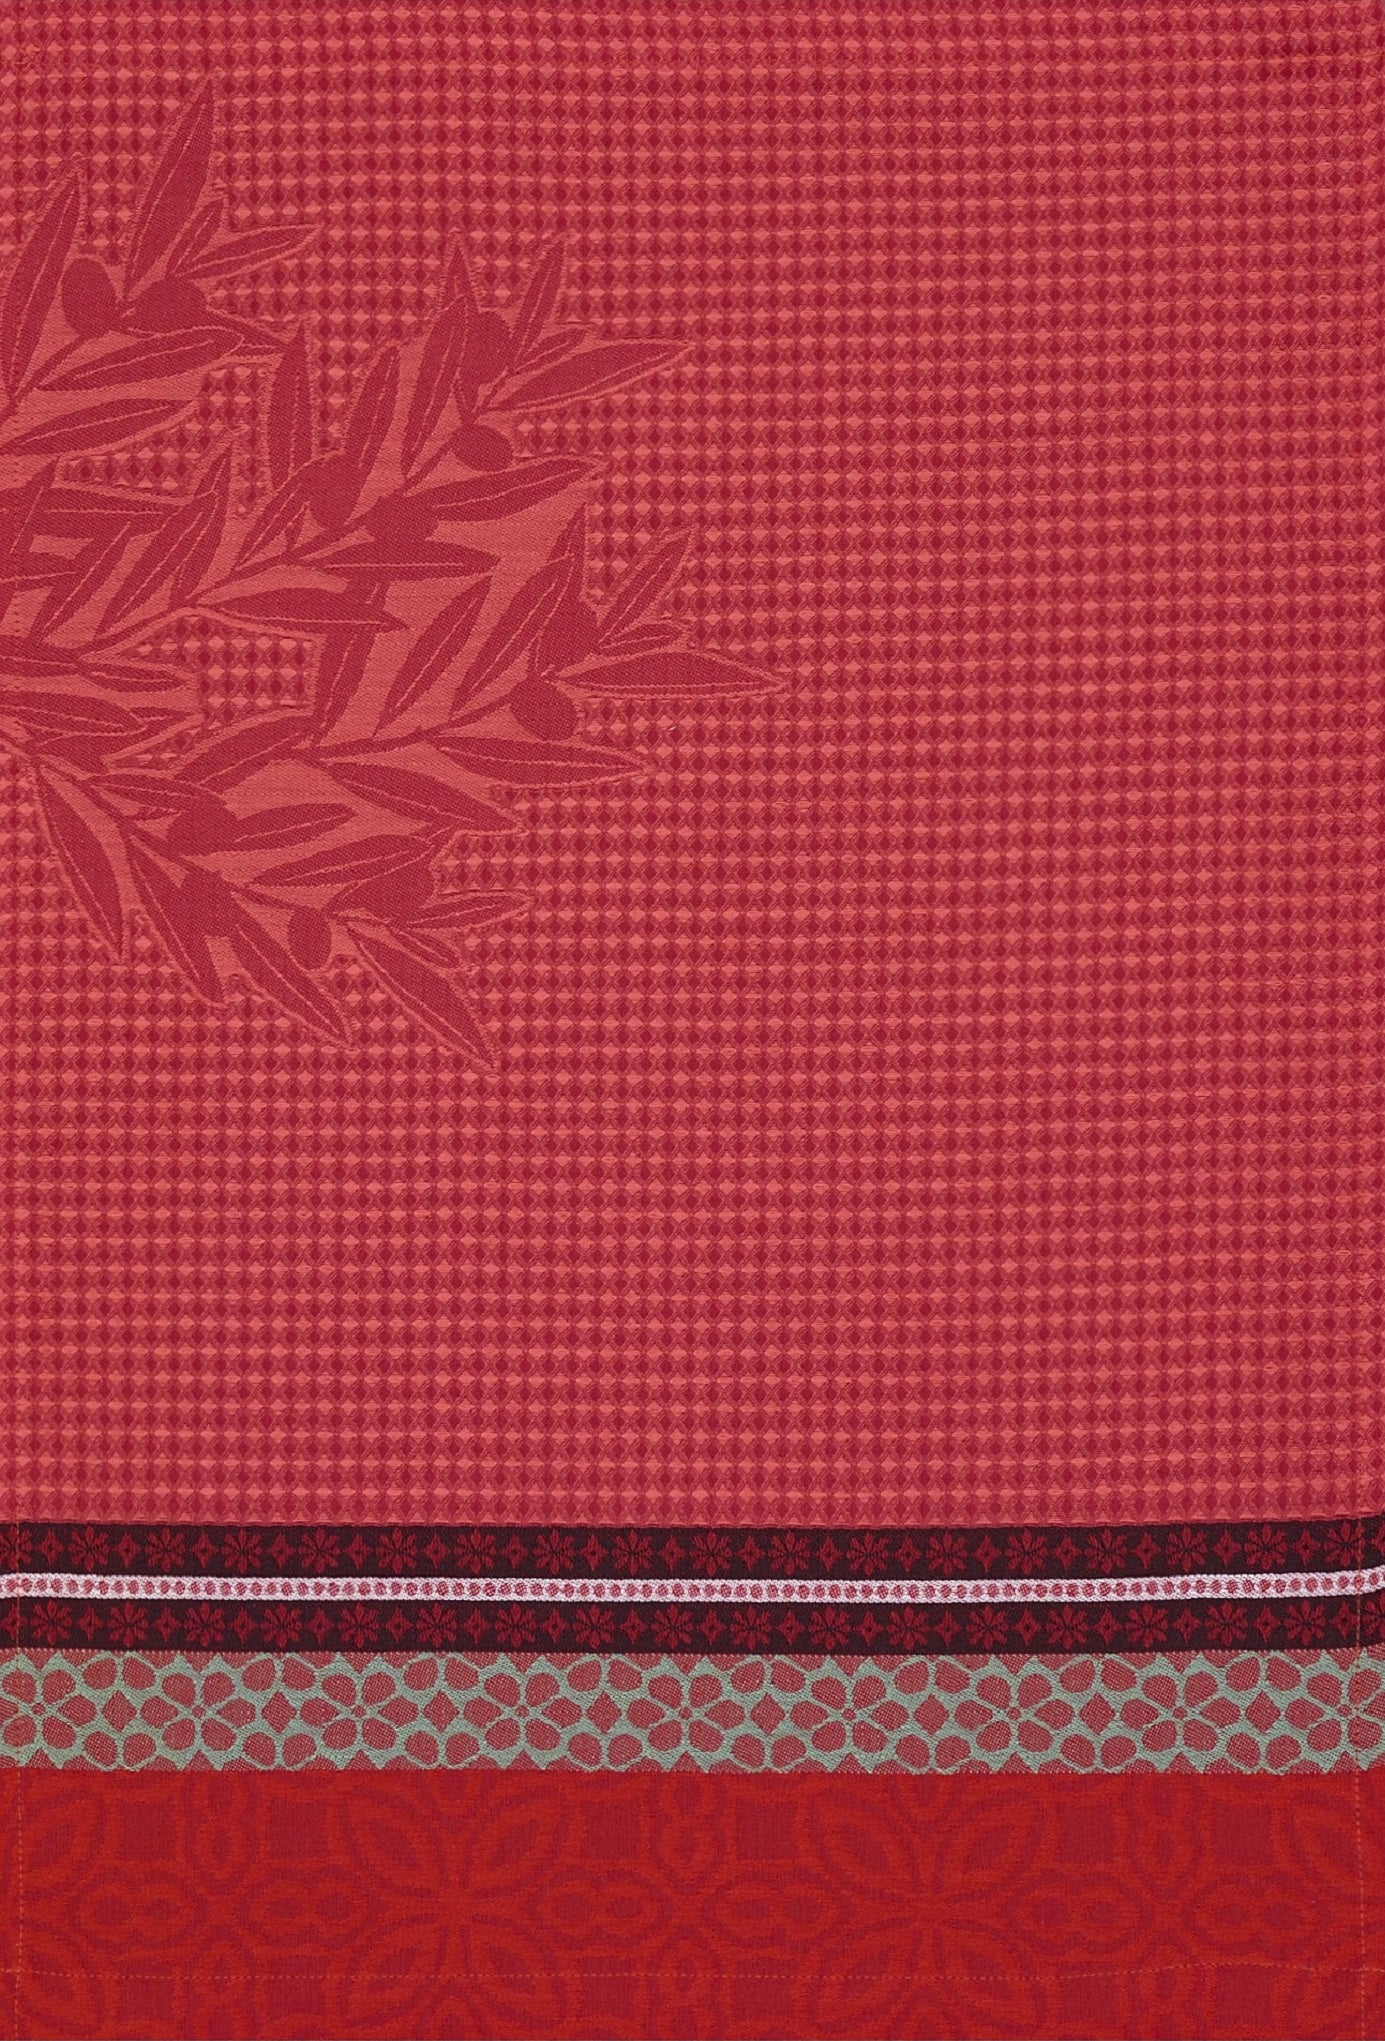 Jacquard Français "Alpilles" (Red), Woven cotton hand towel. Made in France - Home Landing